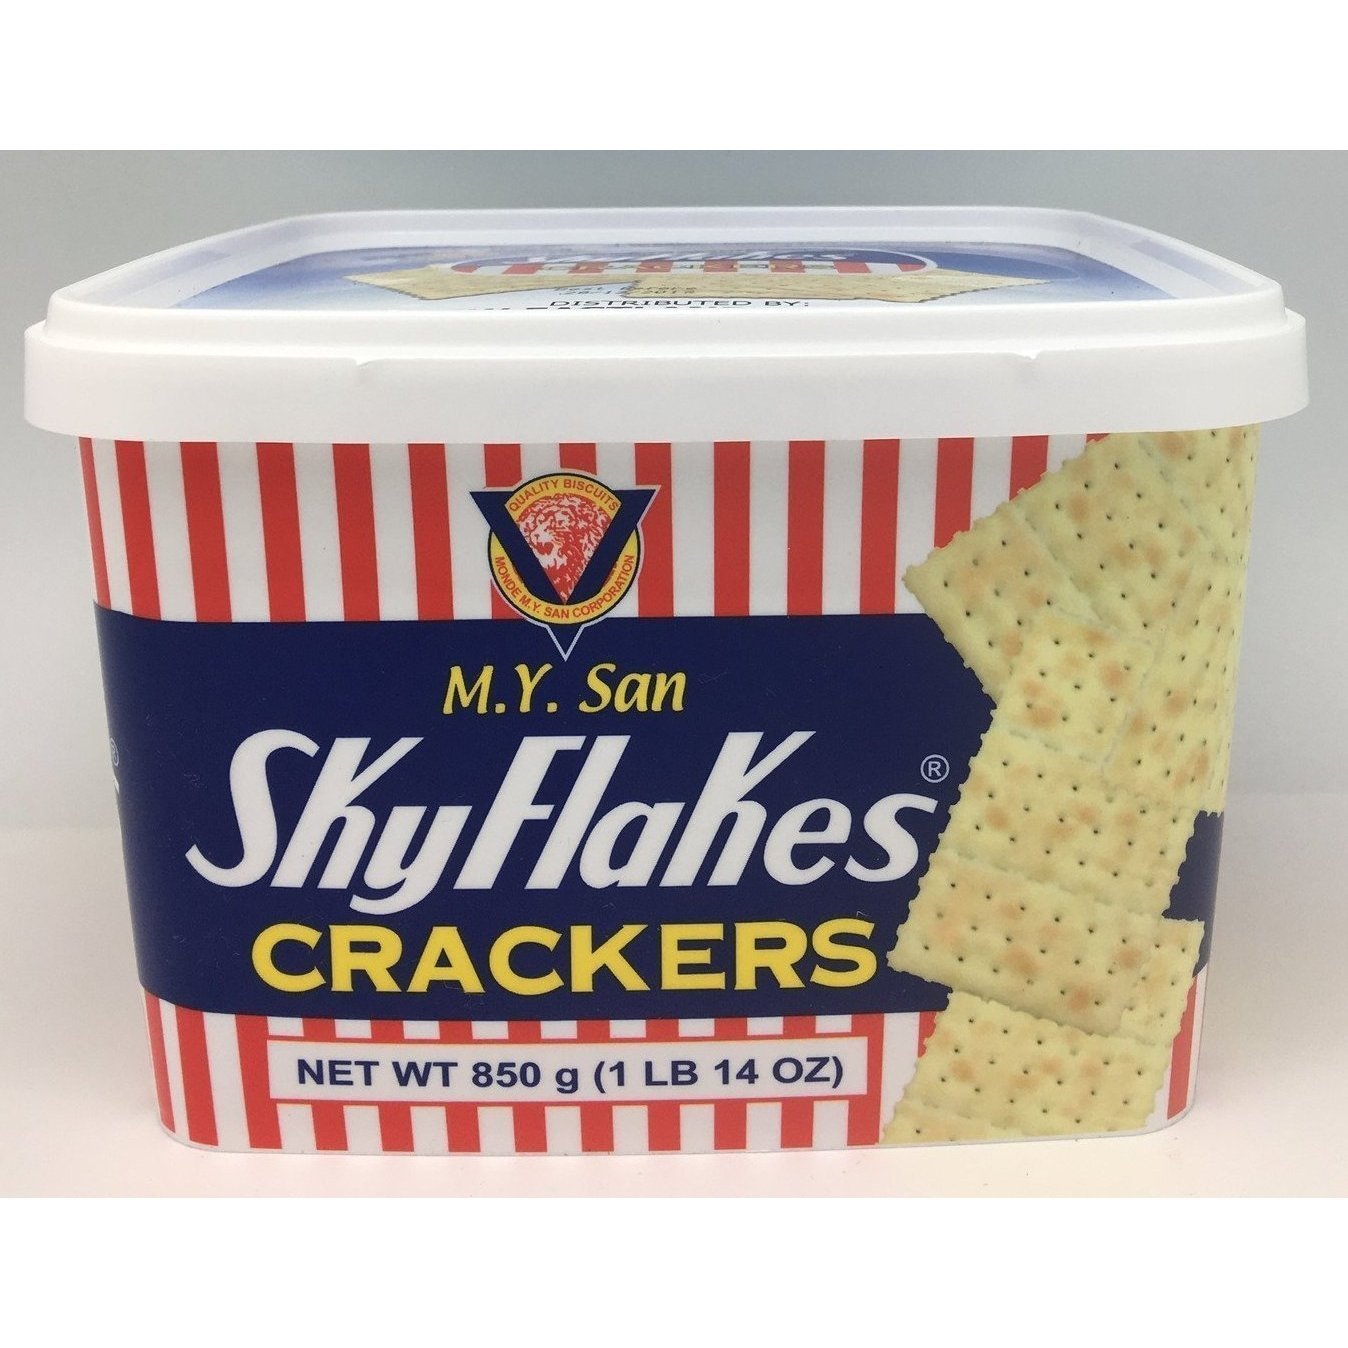 C005T M.Y. San Brand - Sky Flakes Crackers 850g- 12 box /1ctn - New Eastland Pty Ltd - Asian food wholesalers